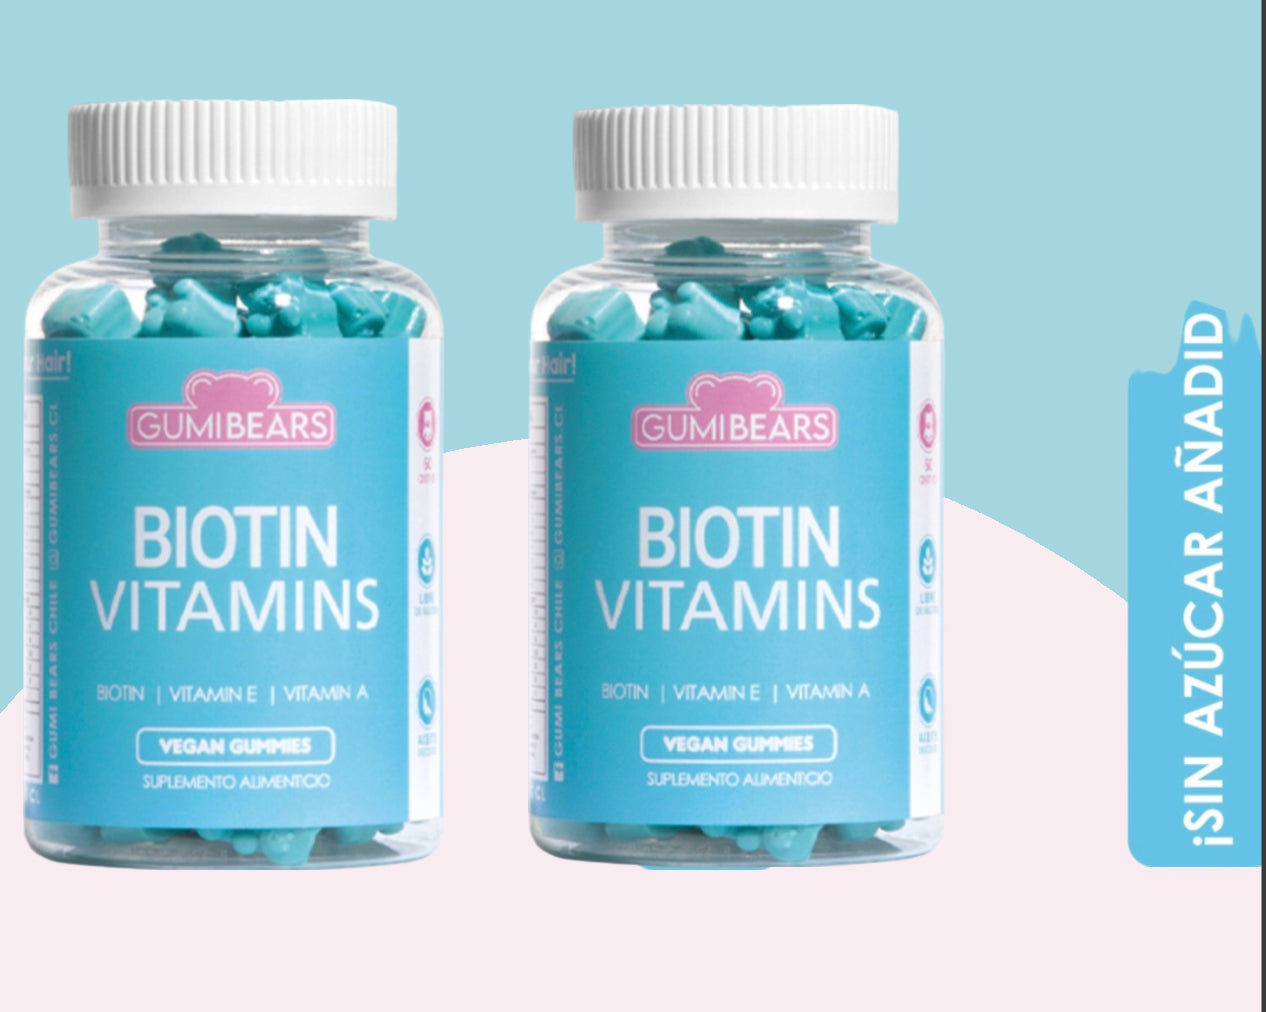 Oferta !“biotin Vitamins de "Gumi bears"